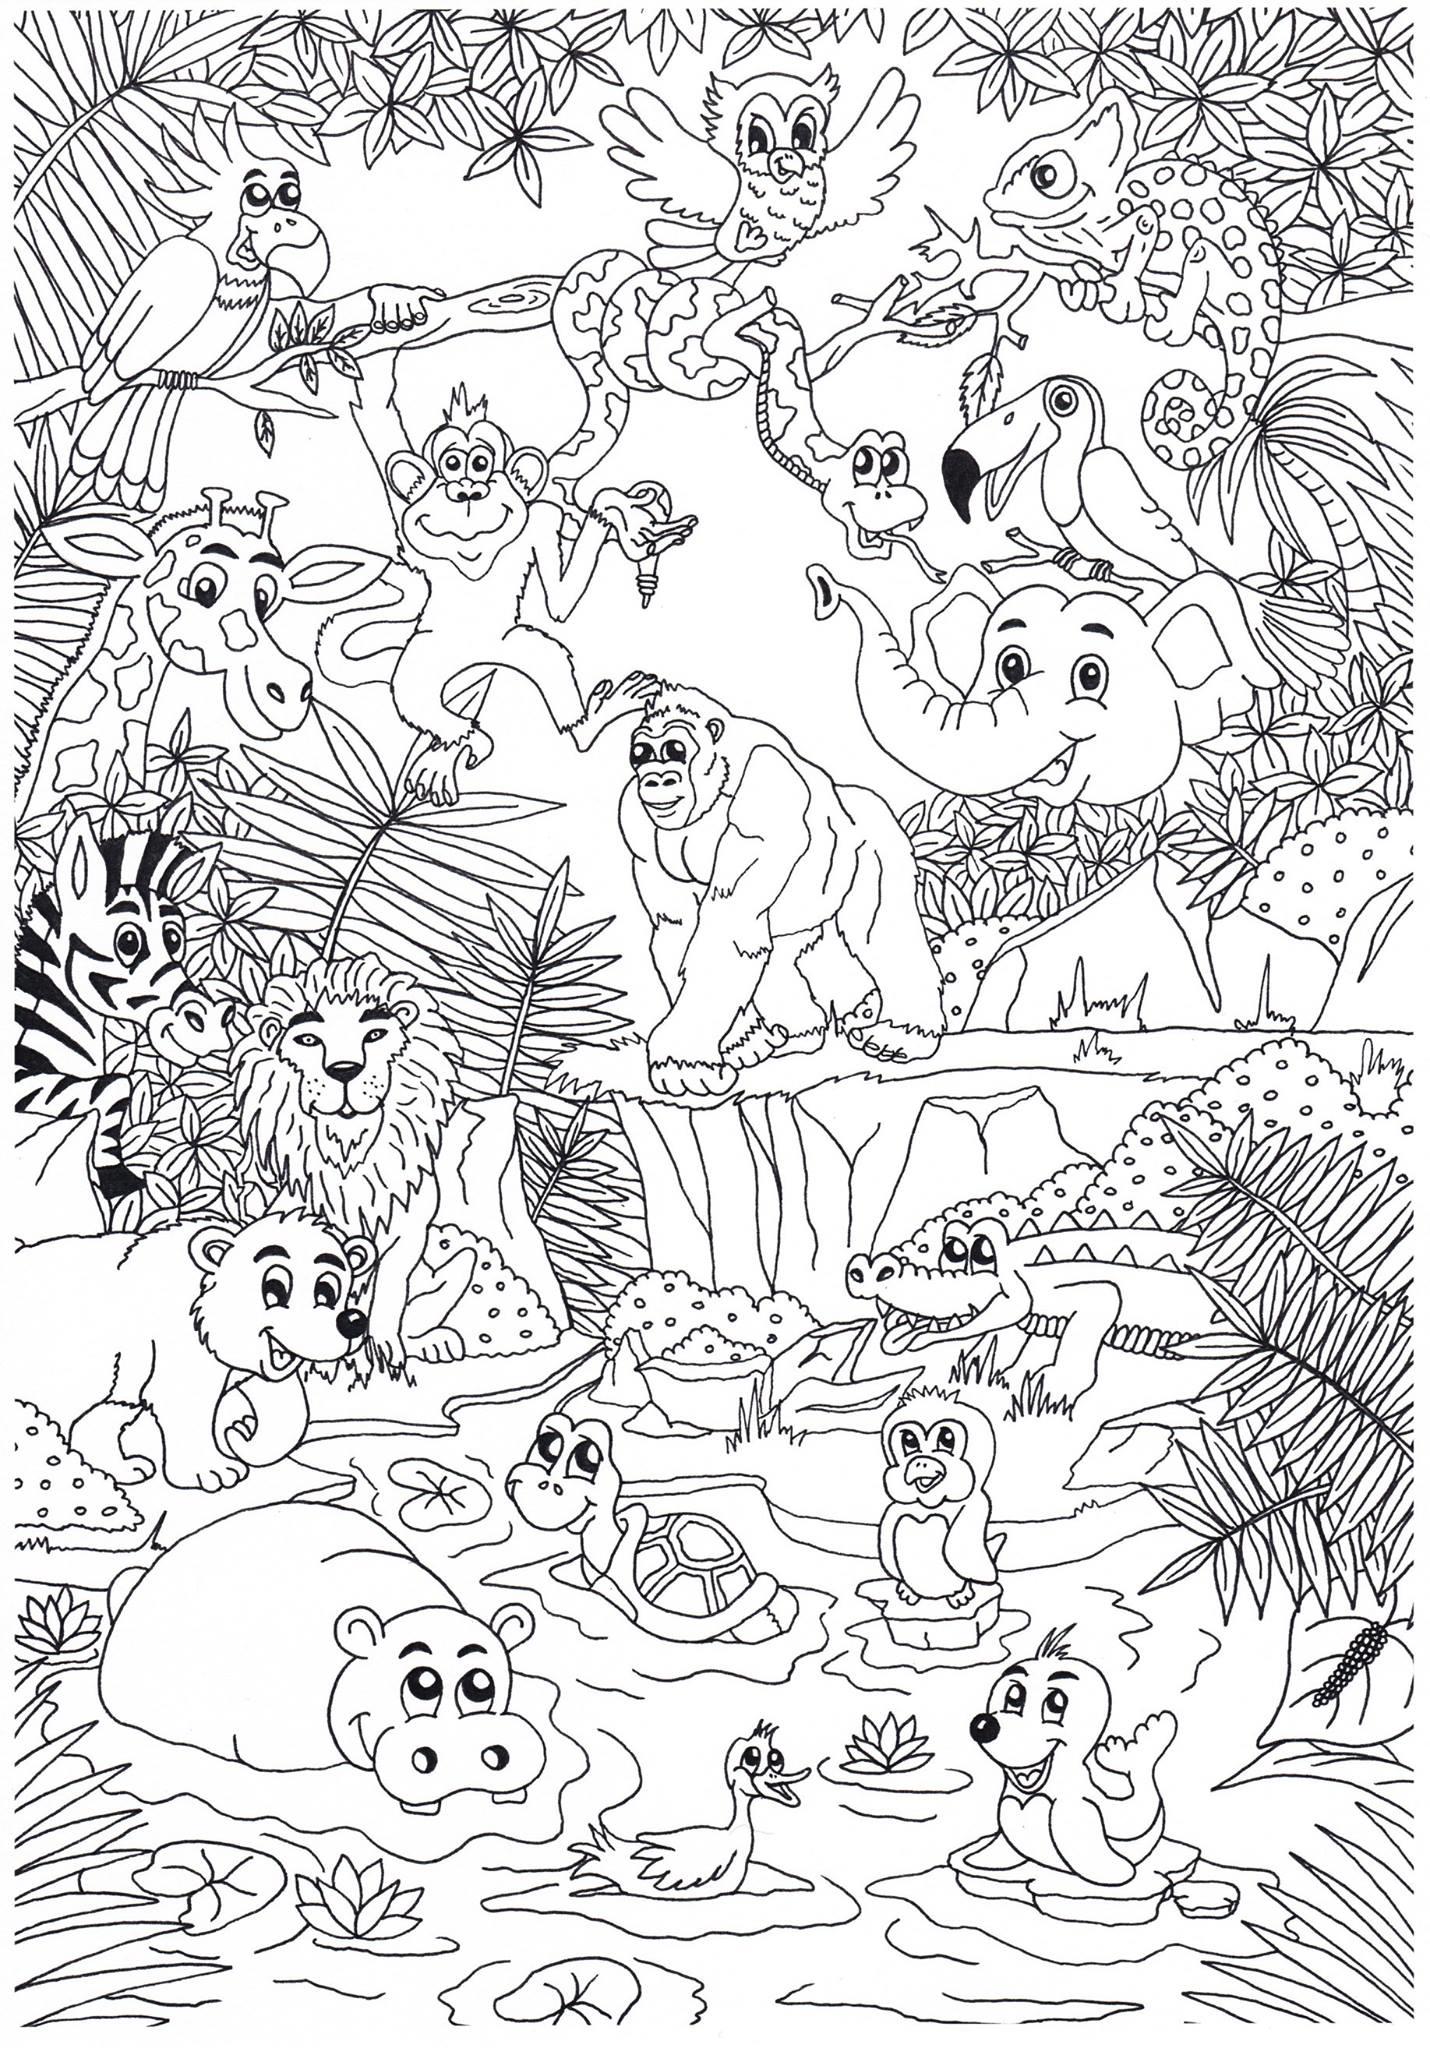 Dibujo para colorear animales en la selva - Dibujos Para Imprimir Gratis -  Img 31269